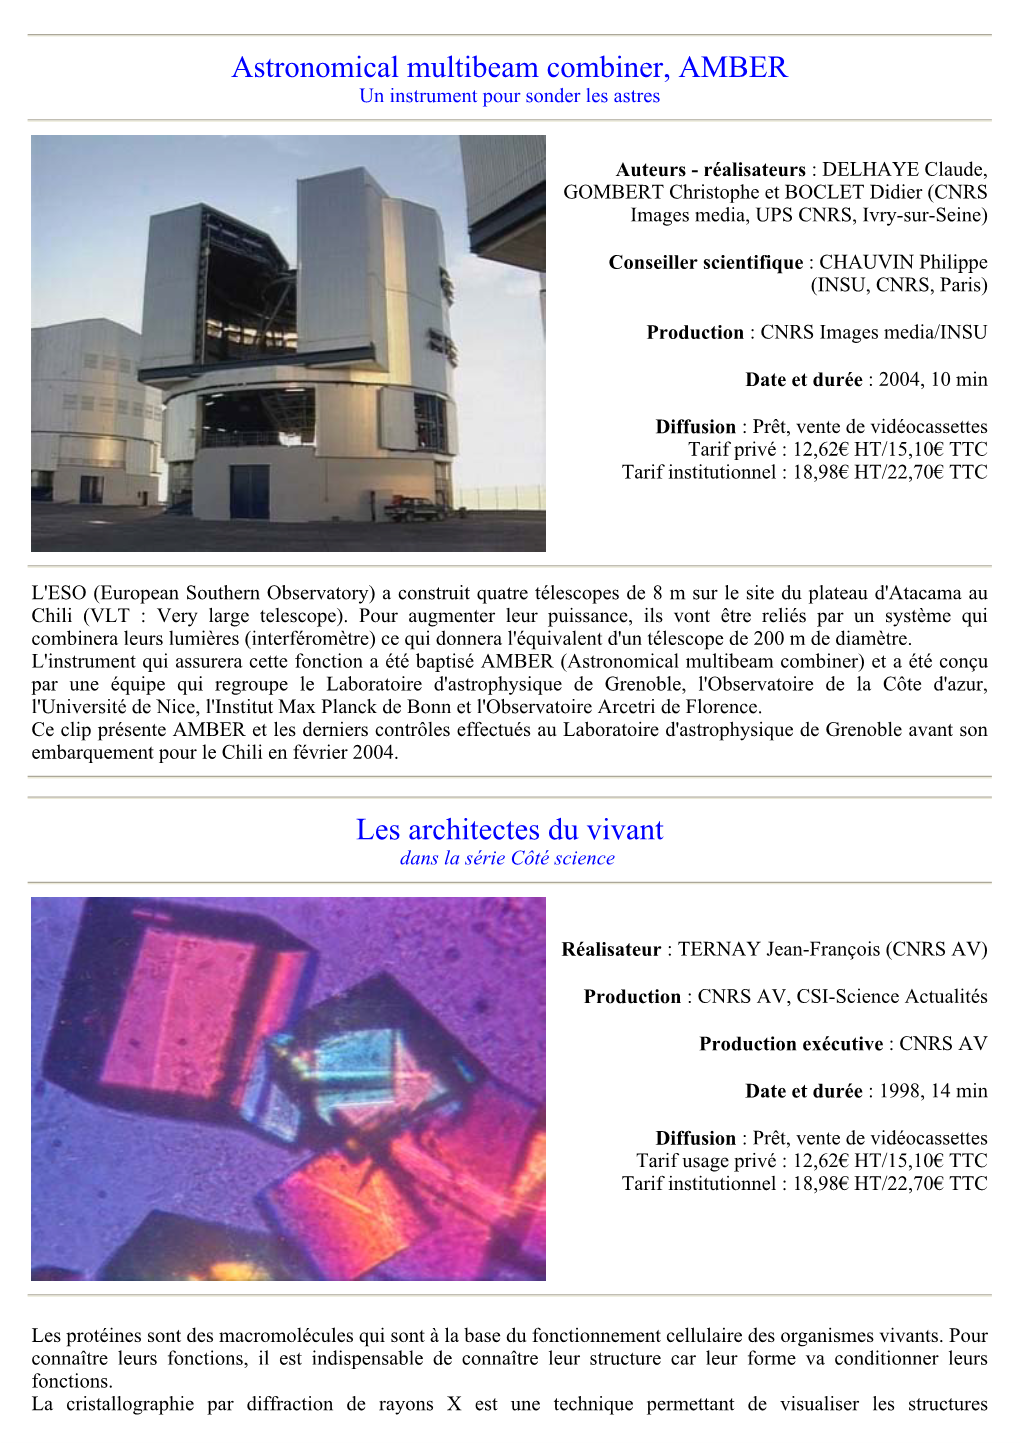 Astronomical Multibeam Combiner, AMBER Les Architectes Du Vivant